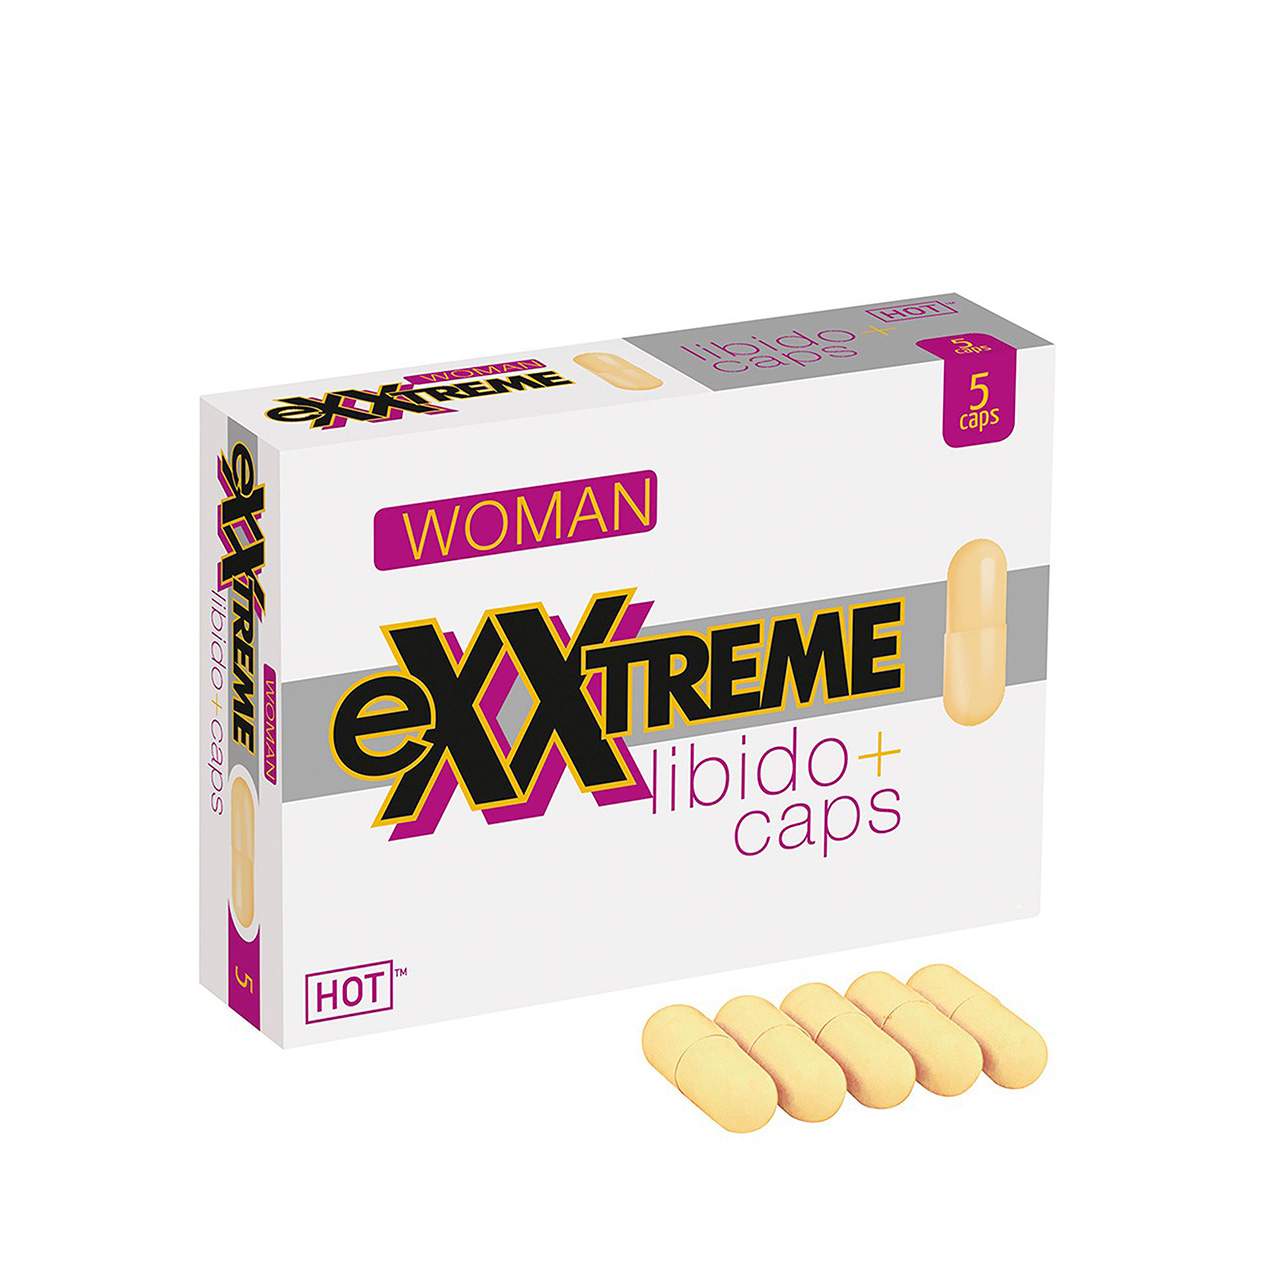 HOT eXXtreme Libido caps dla kobiet 5 szt.